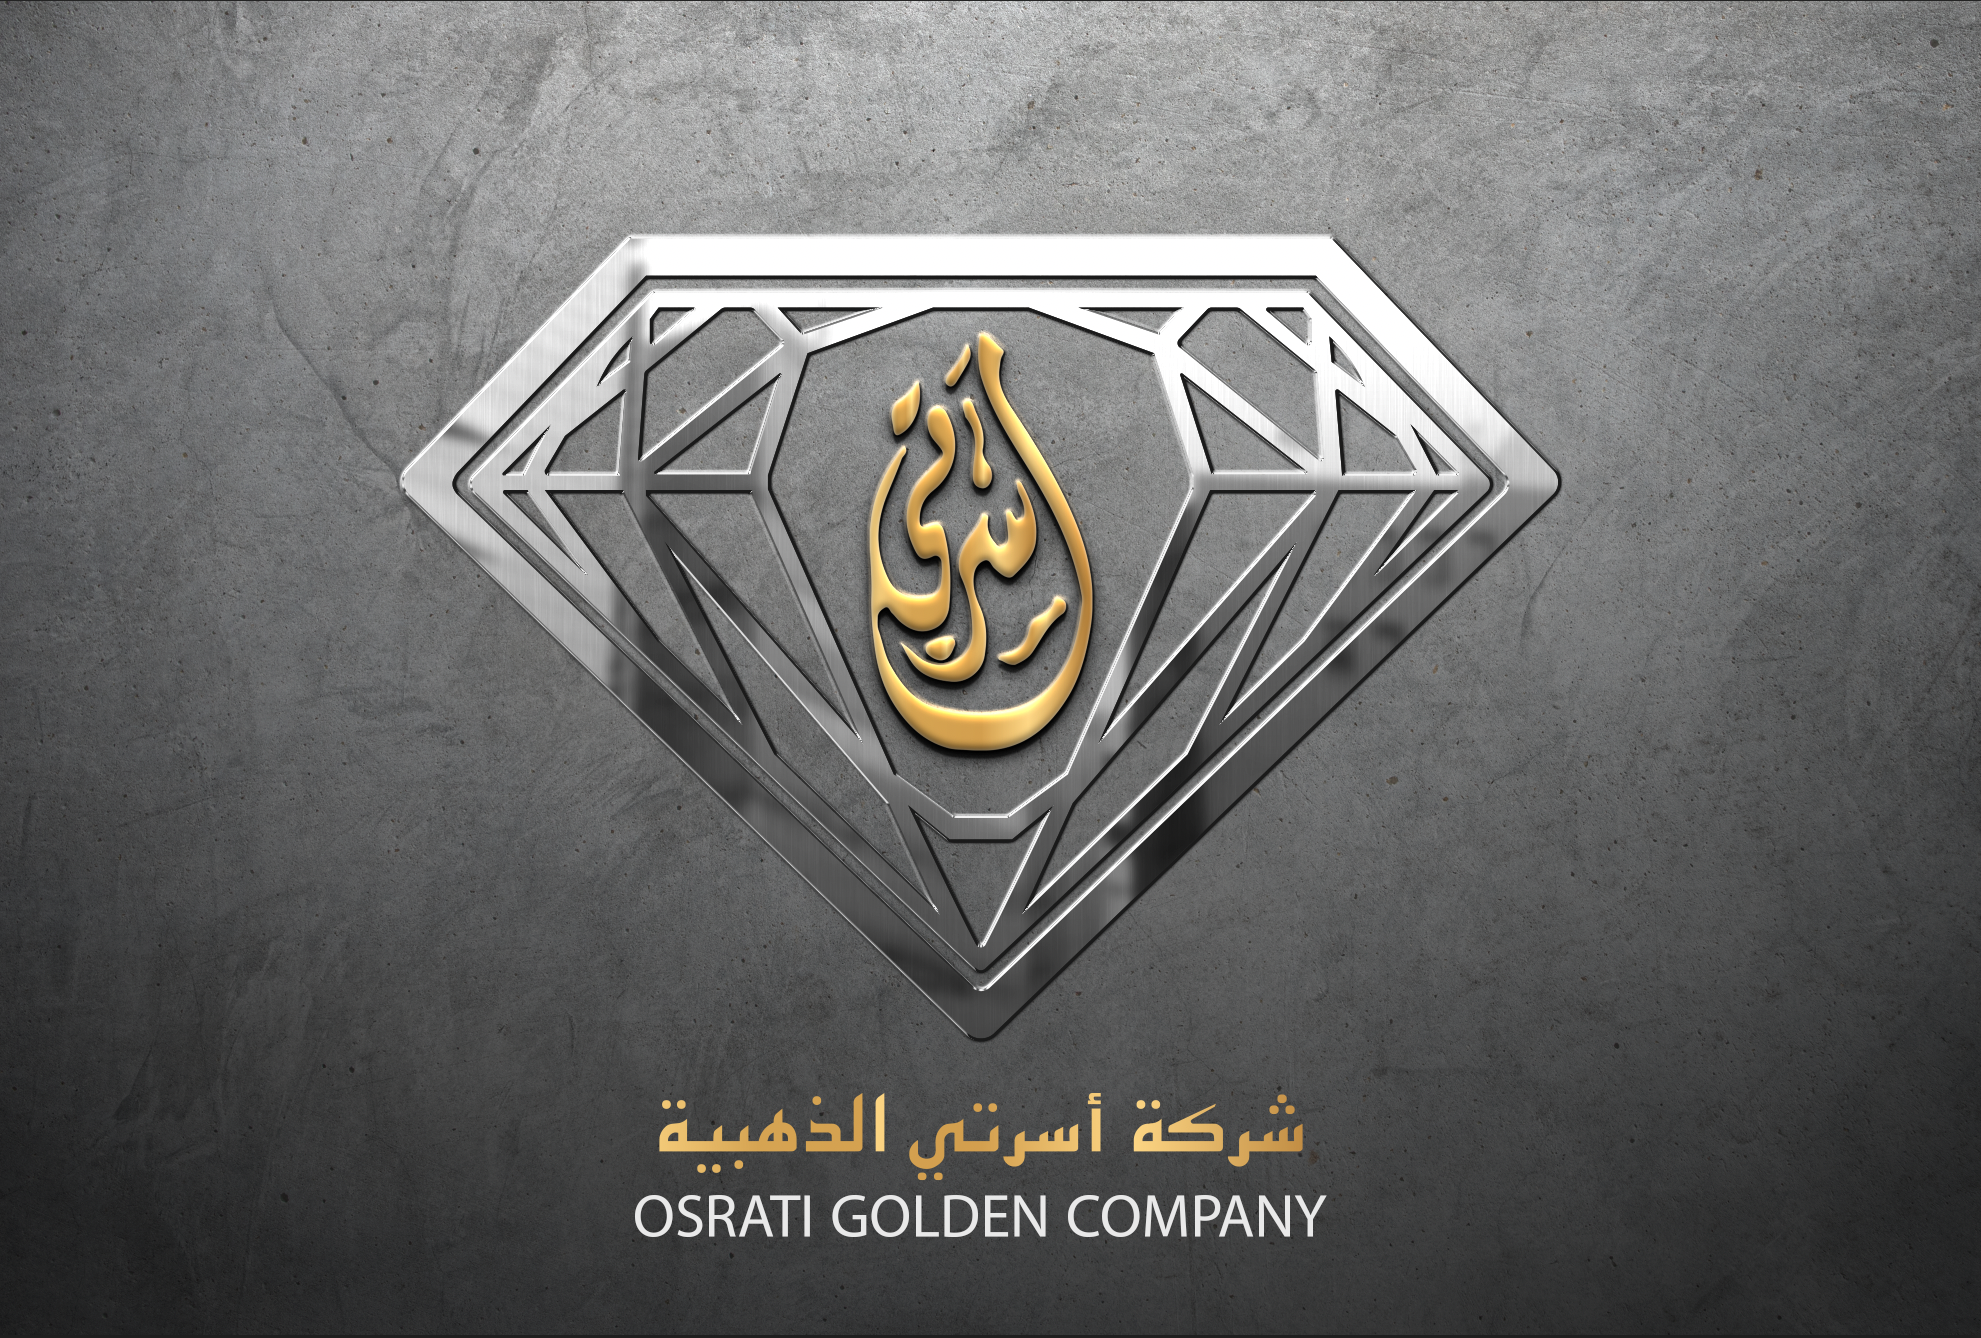 OSRATI GOLDEN COMPANY